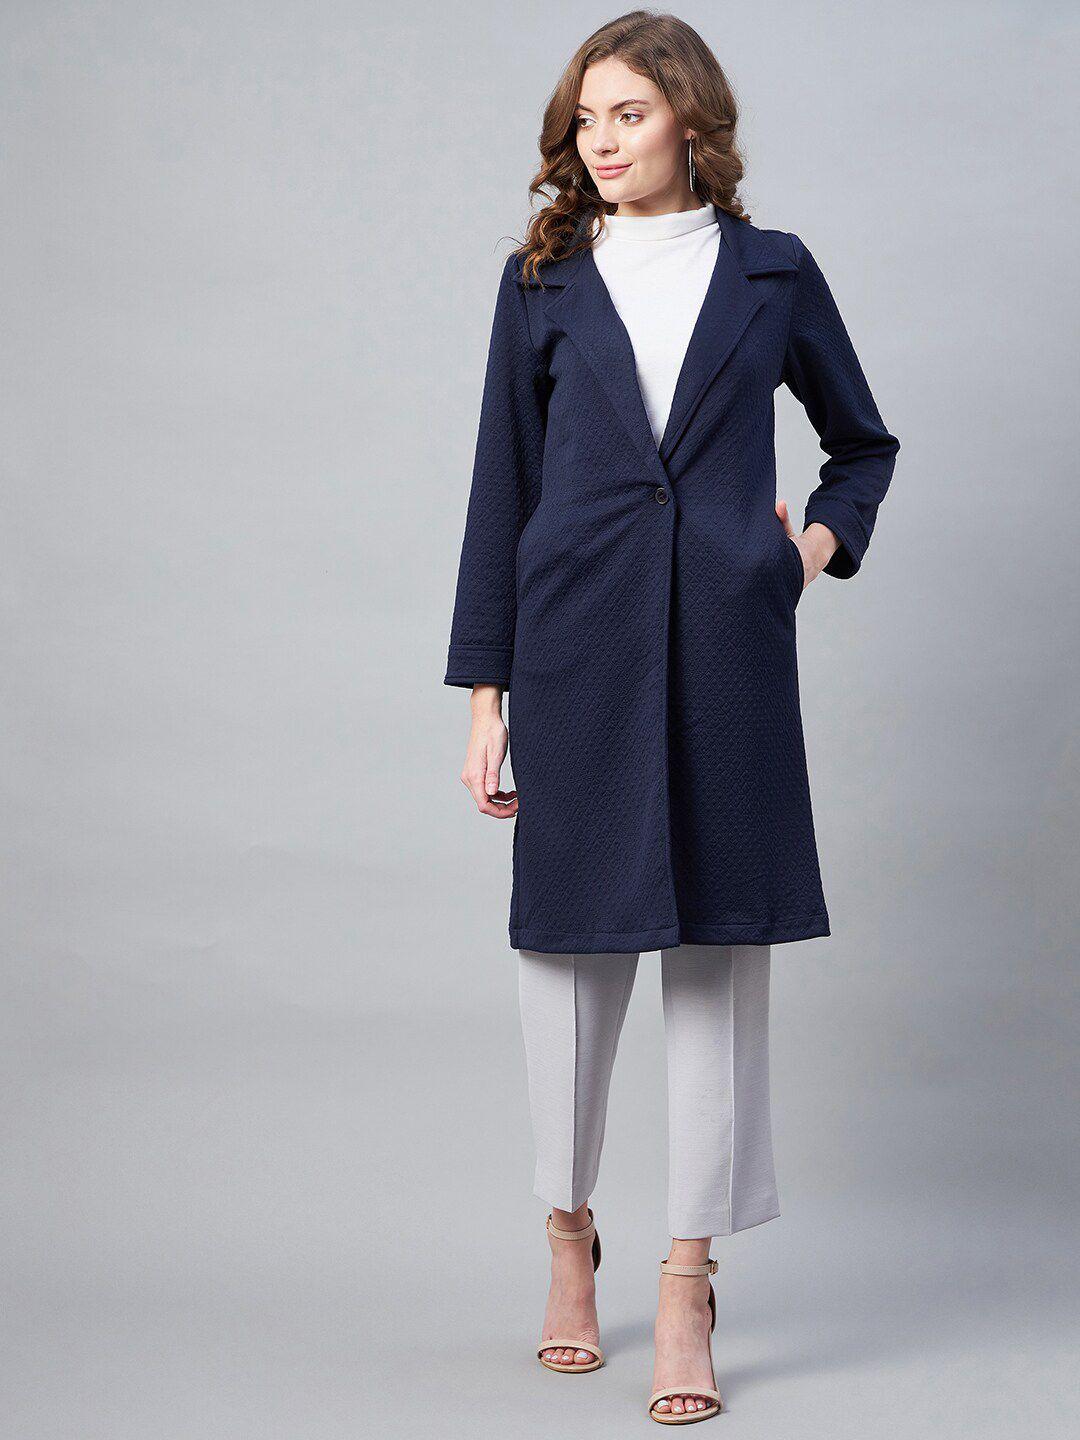 stylestone women navy blue self design overcoat